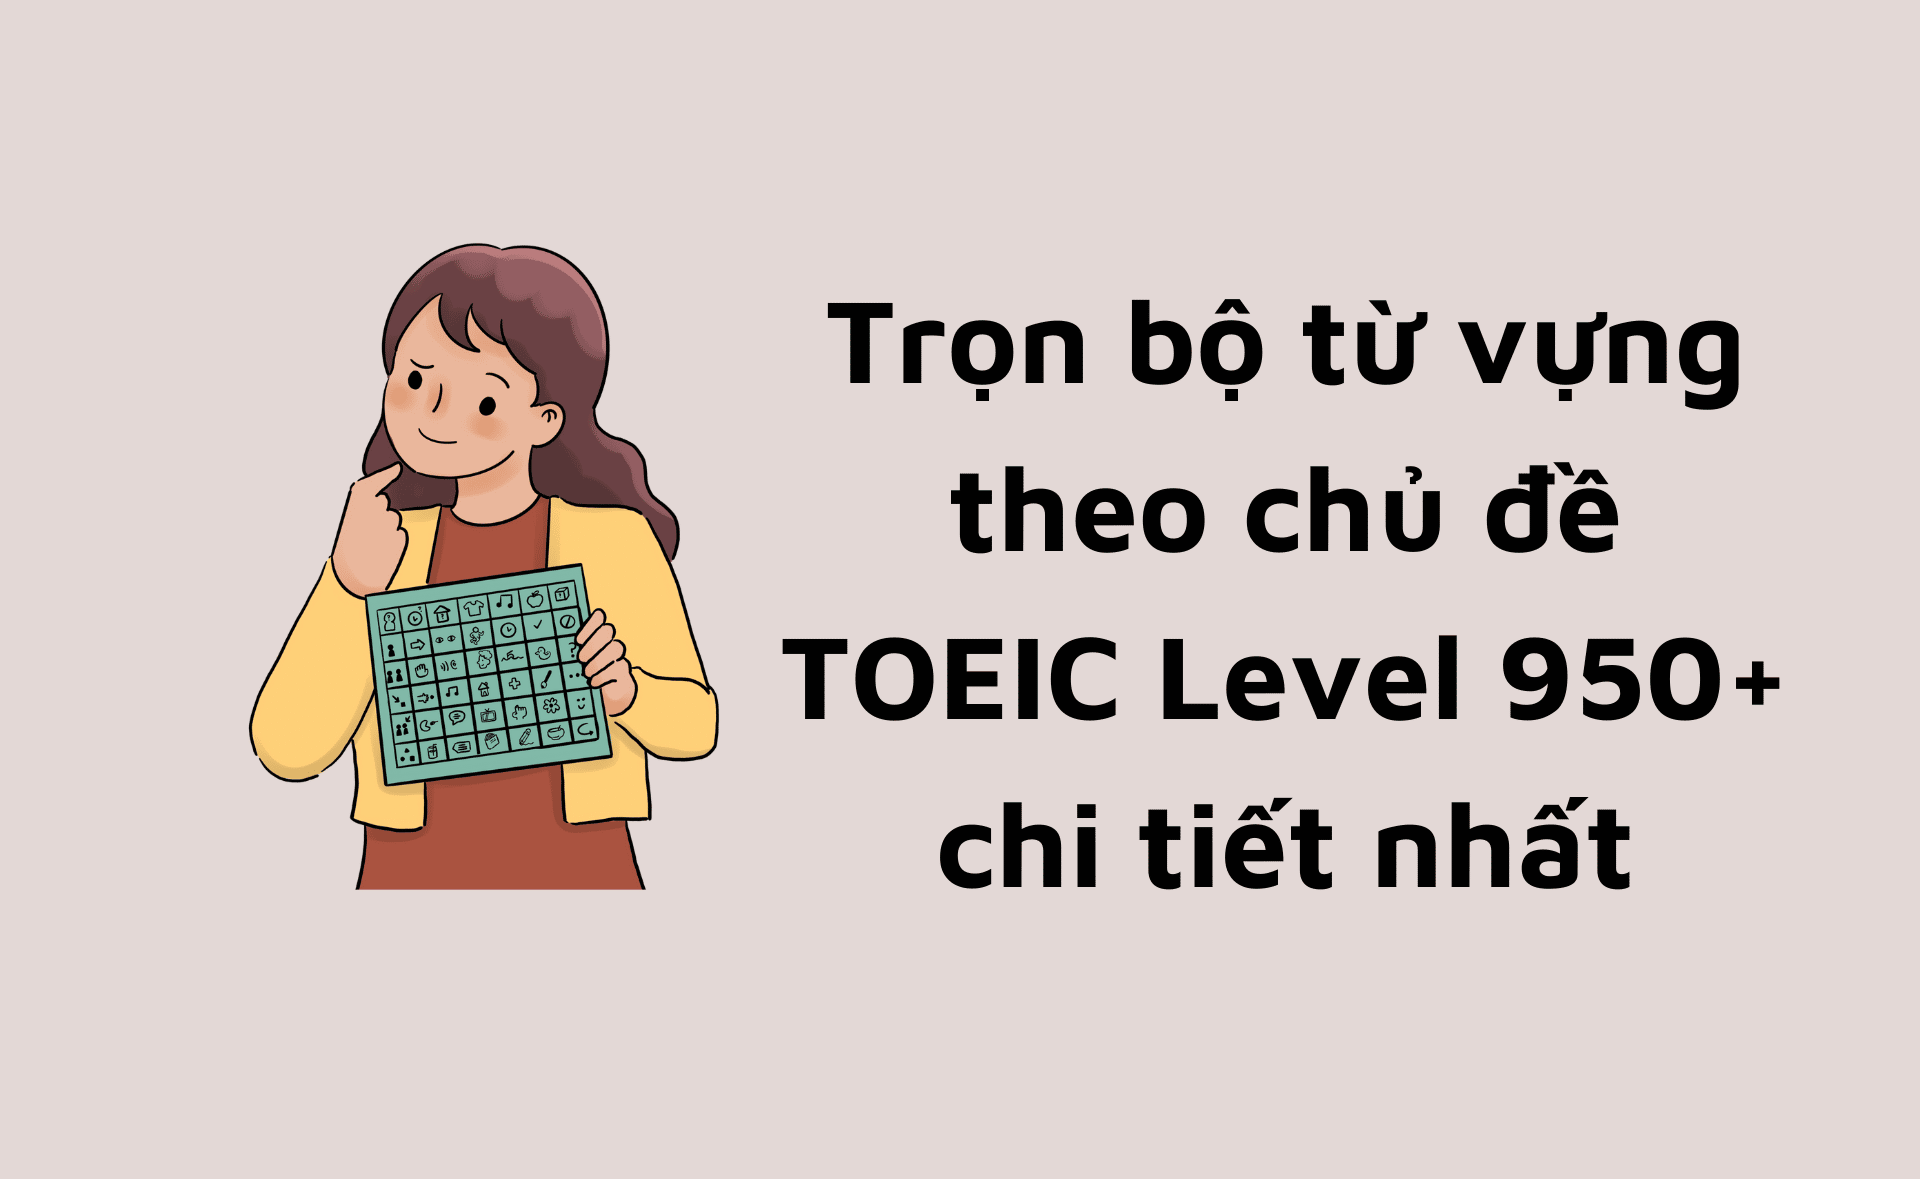 TOEIC Level 950+